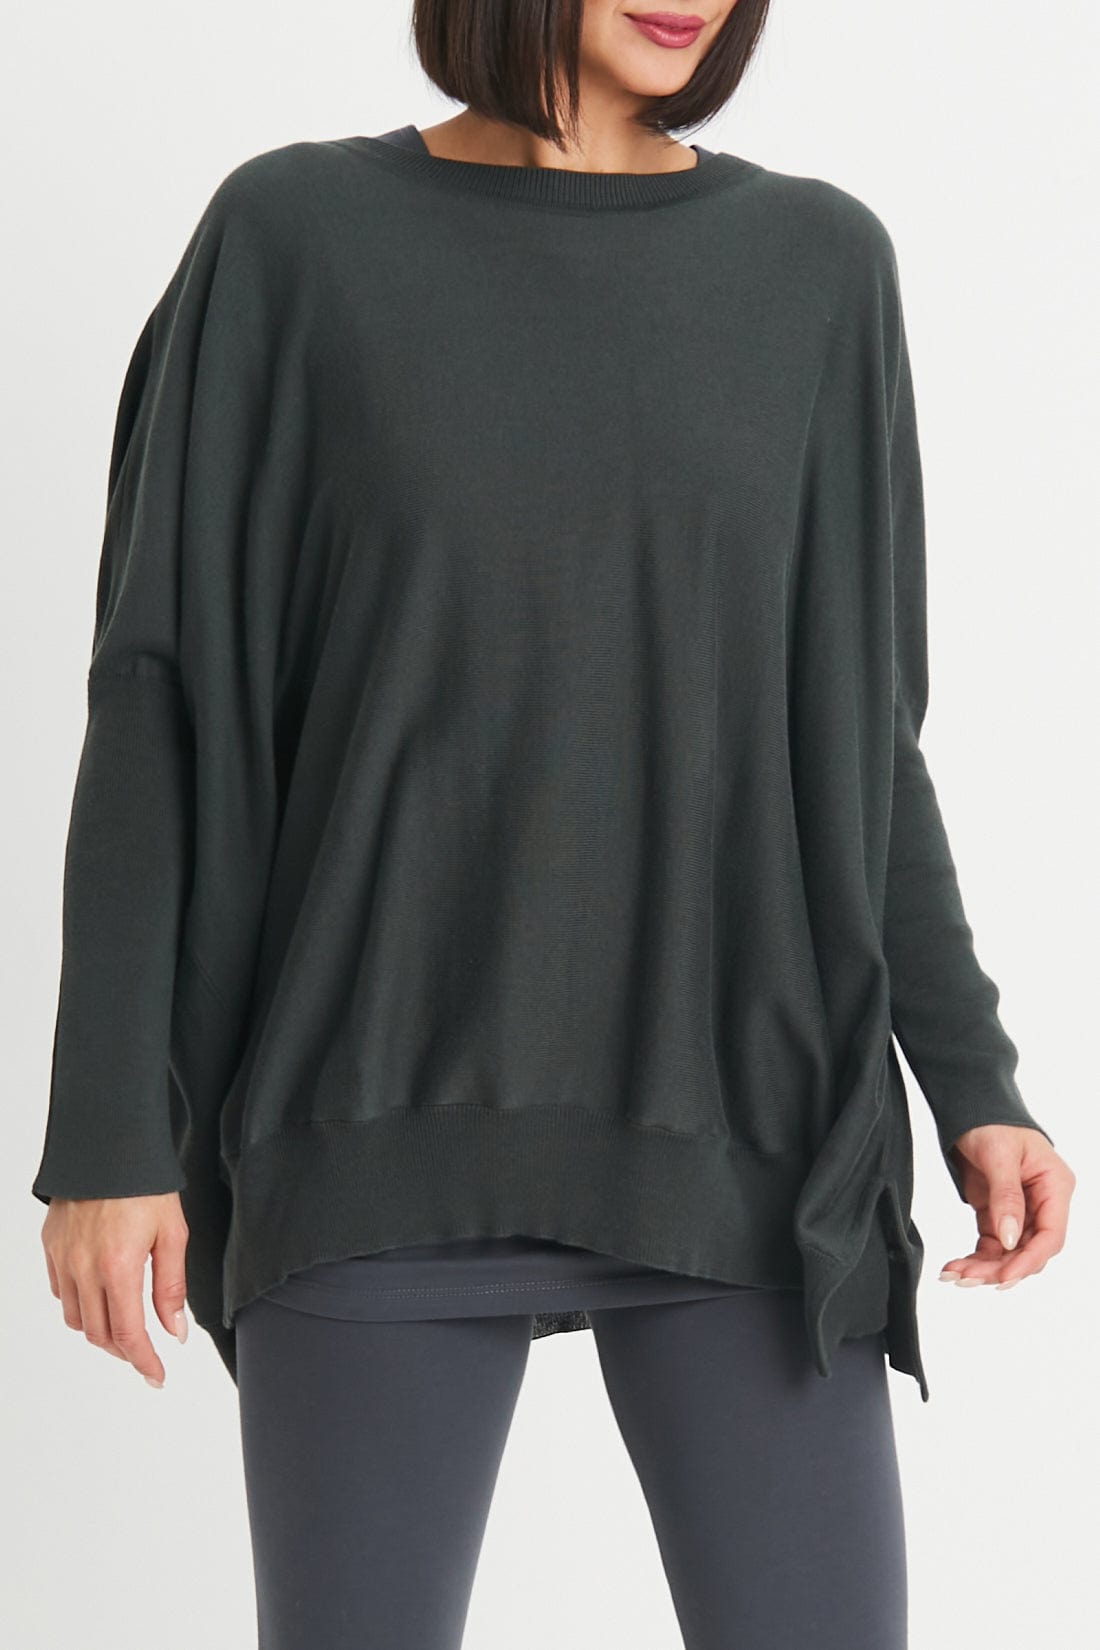 PLANET by Lauren G Women's Sweaters Asphalt / One Size Pima Cotton Oversized Crew Neck Knit